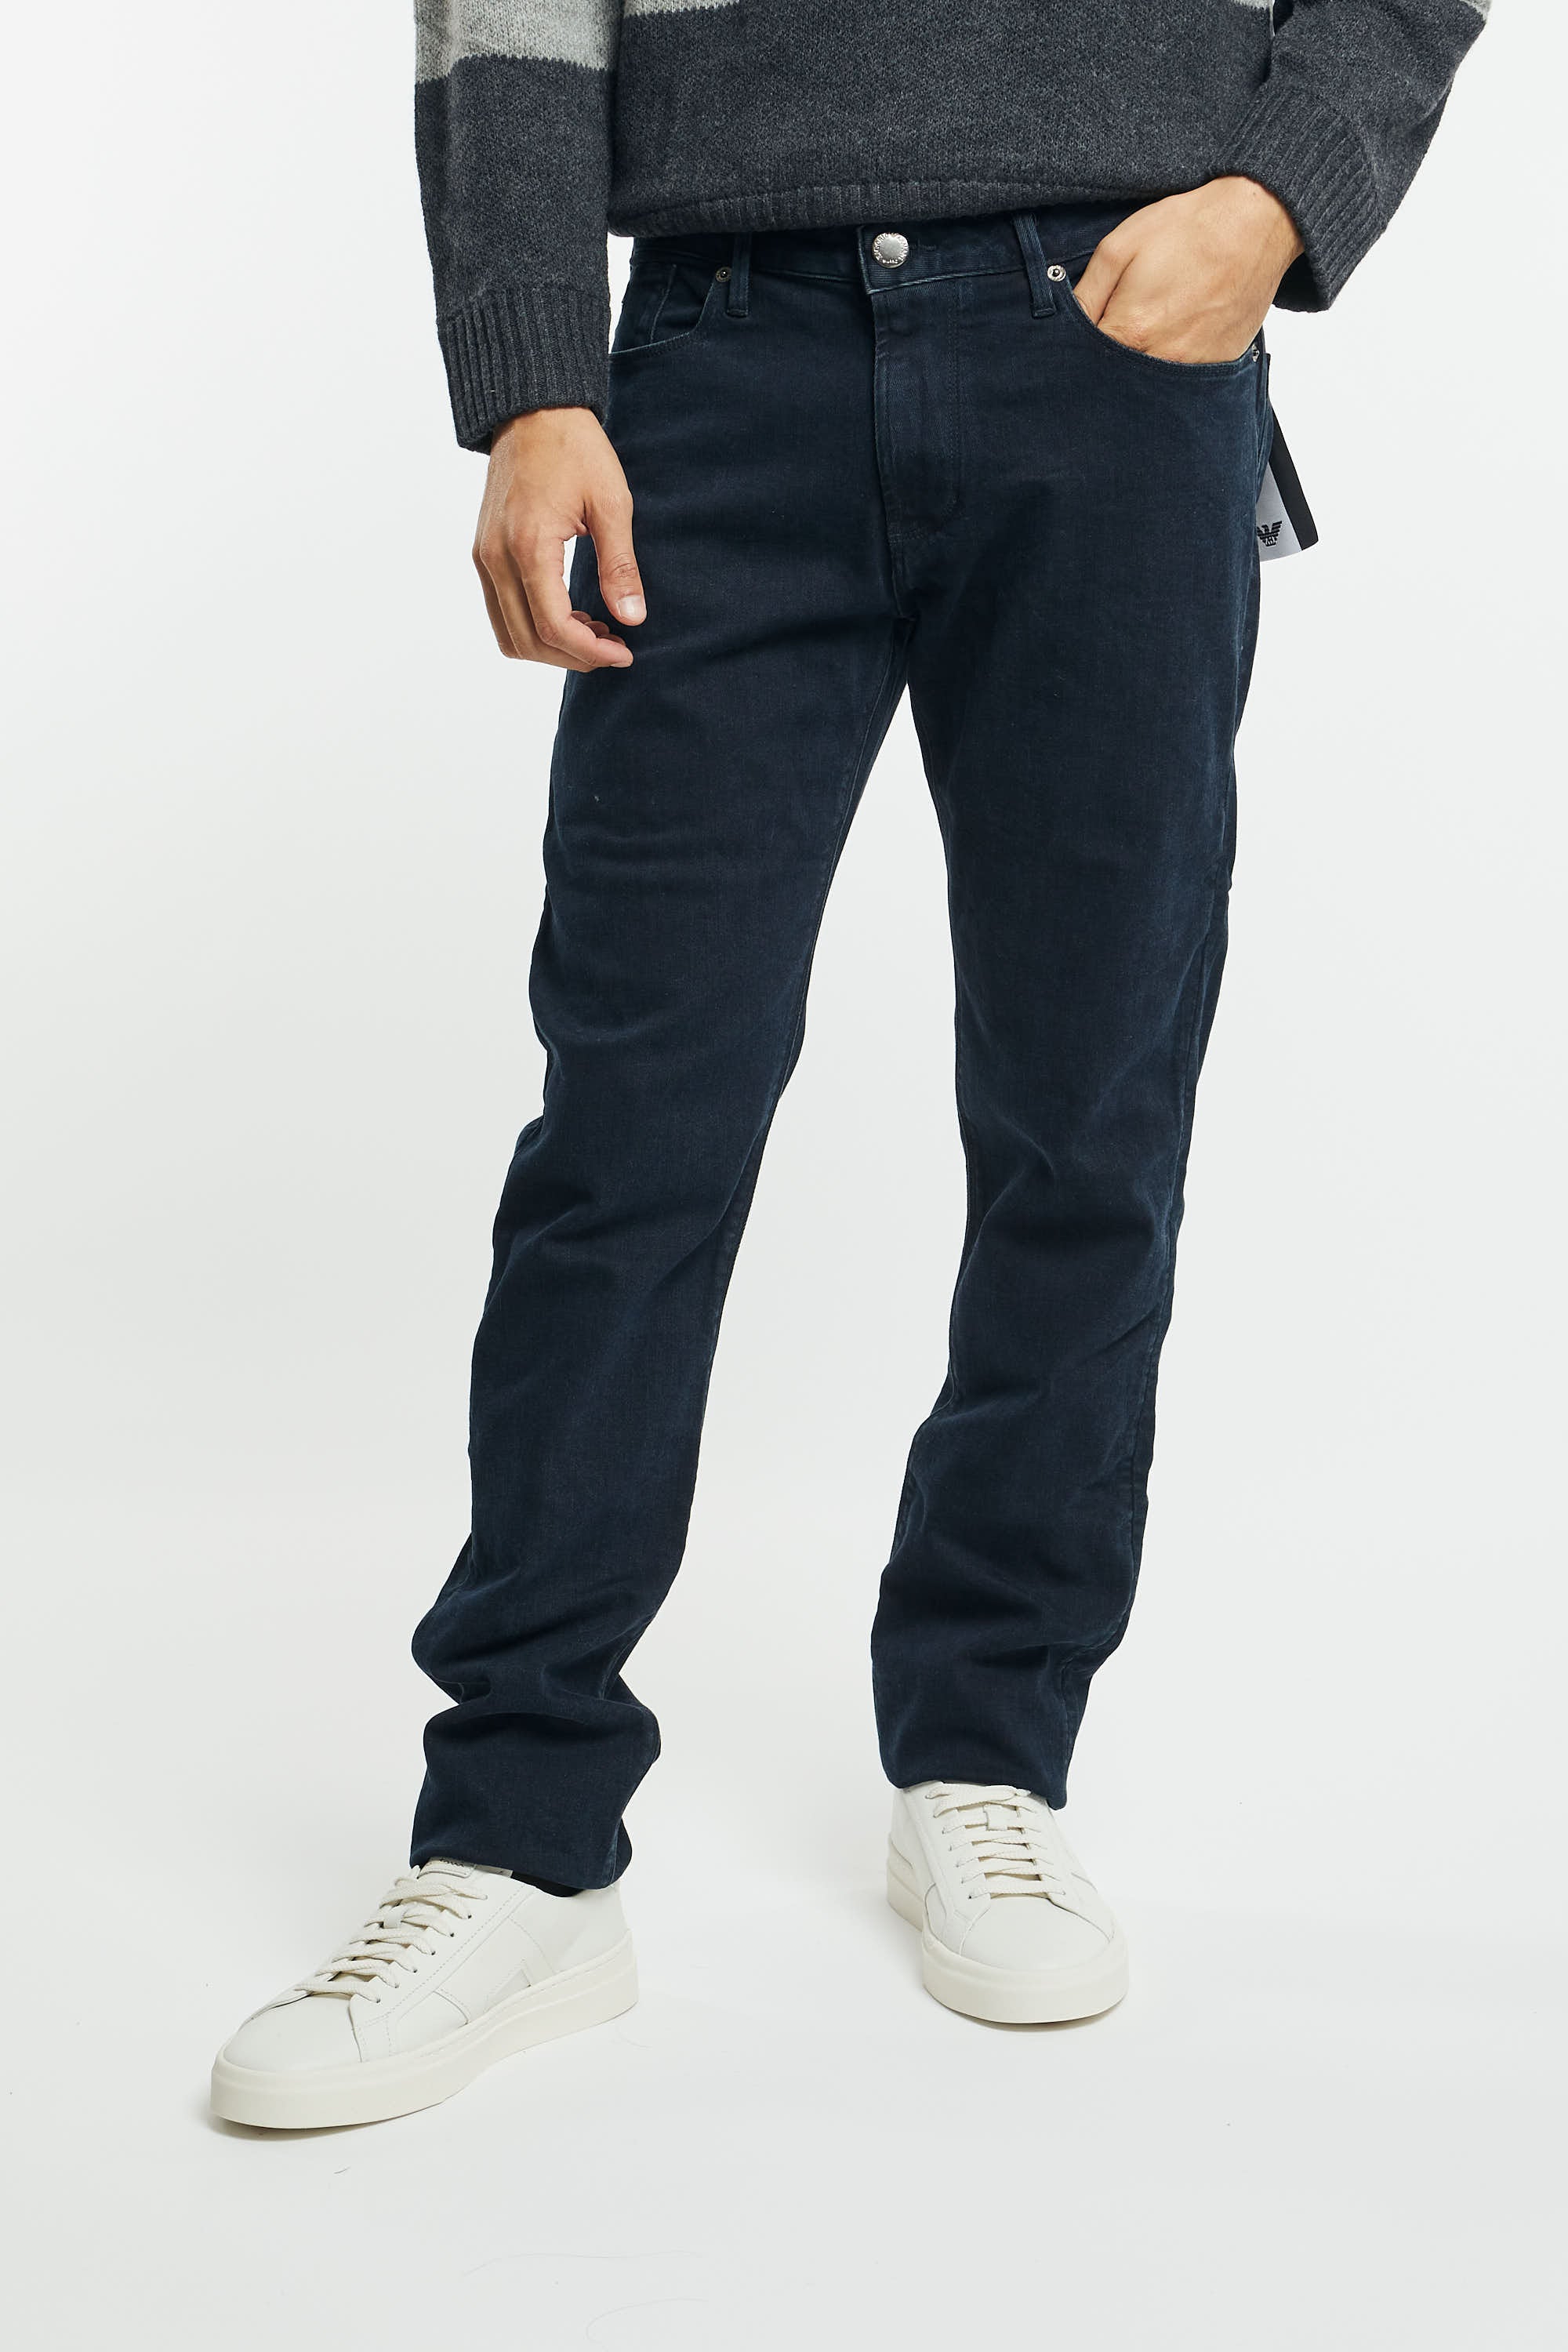 Emporio Armani Jeans J06 Slim Fit in Denim aus Stretch-Baumwolle Blau-4